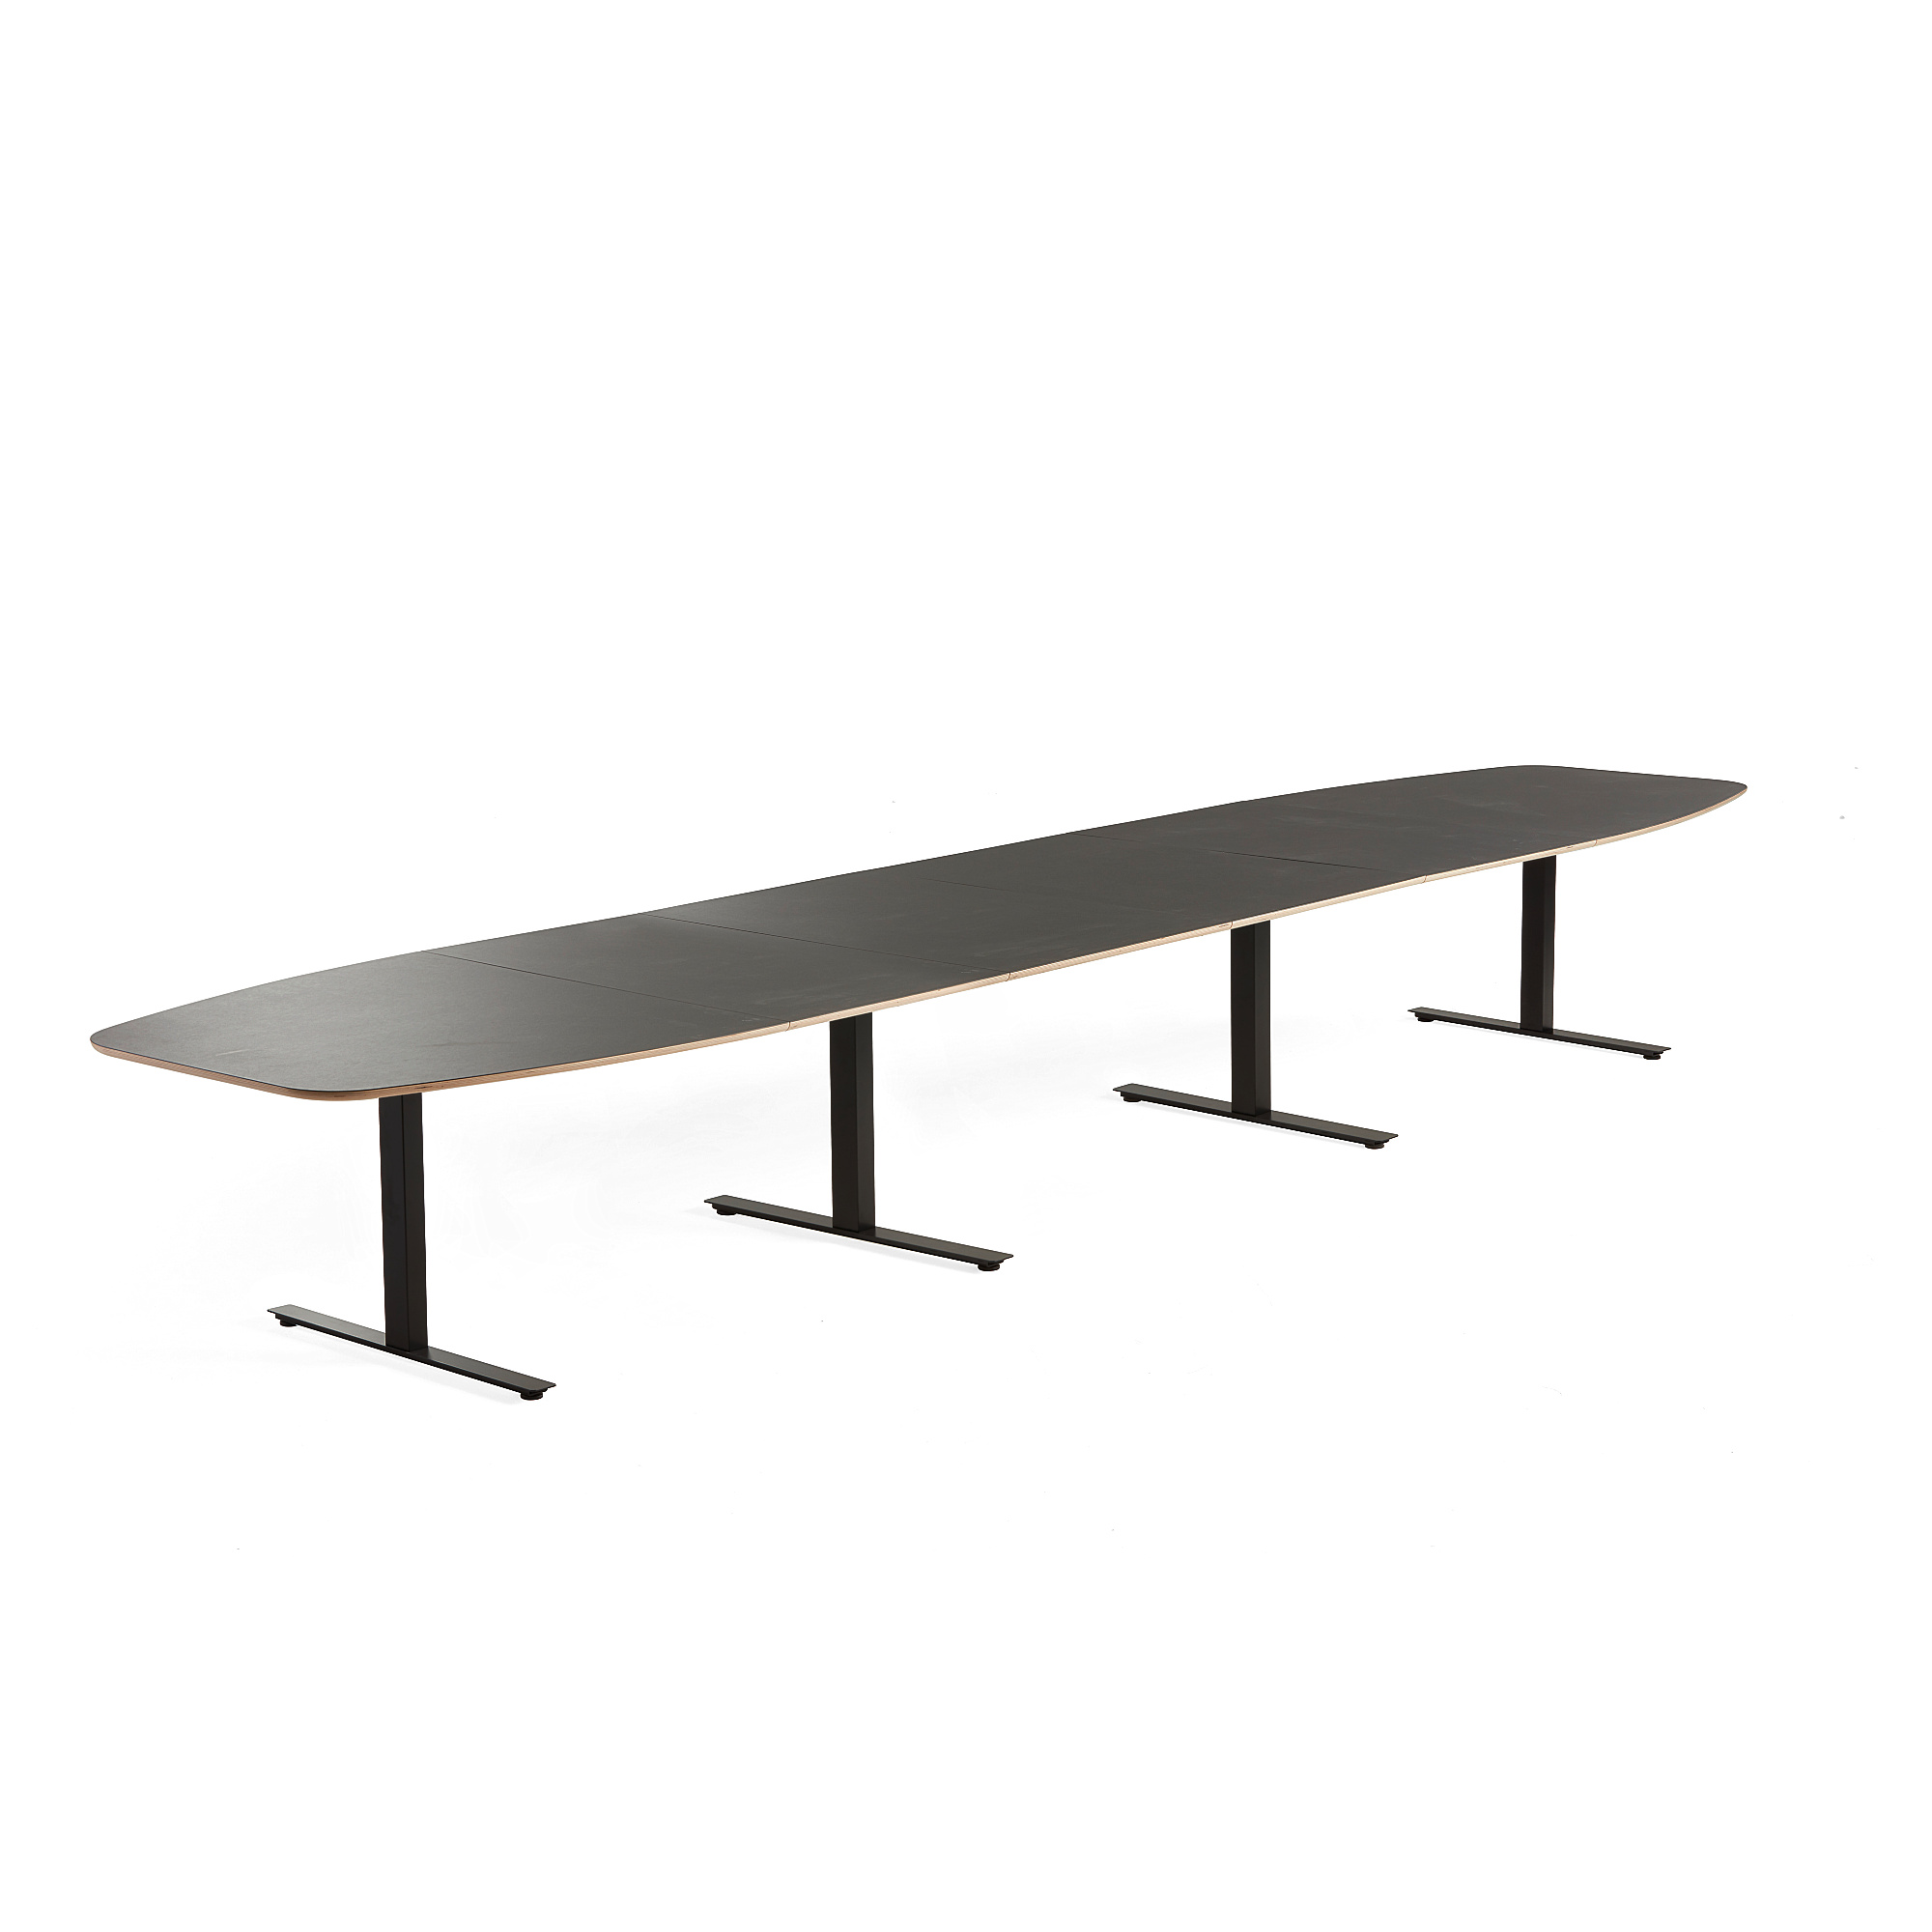 Rokovací stôl AUDREY, 5600x1200 mm, čierny podstavec, tmavošedá doska